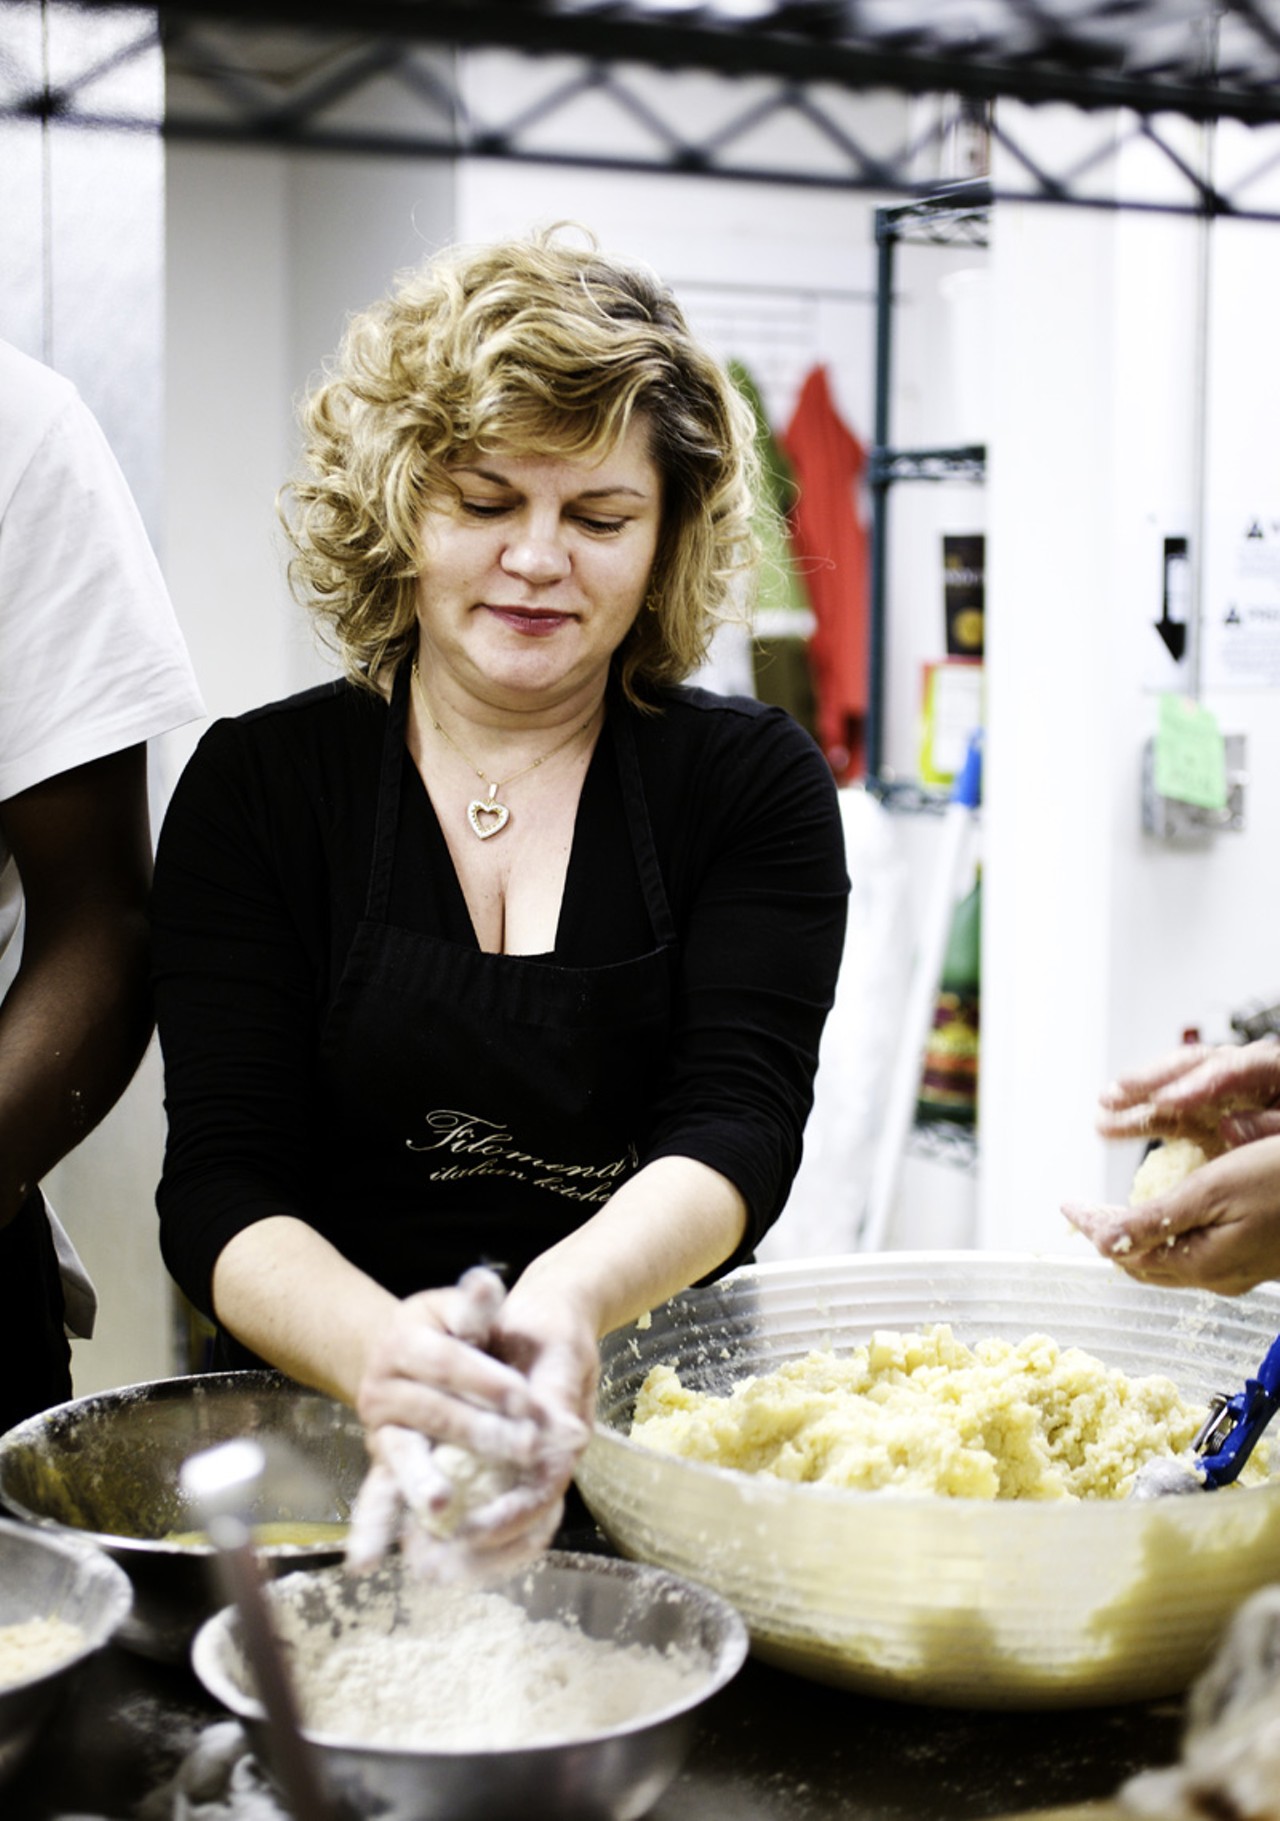 Filomena Dean, one of the four owner's of Filomena's, in the kitchen preparing the arancini.